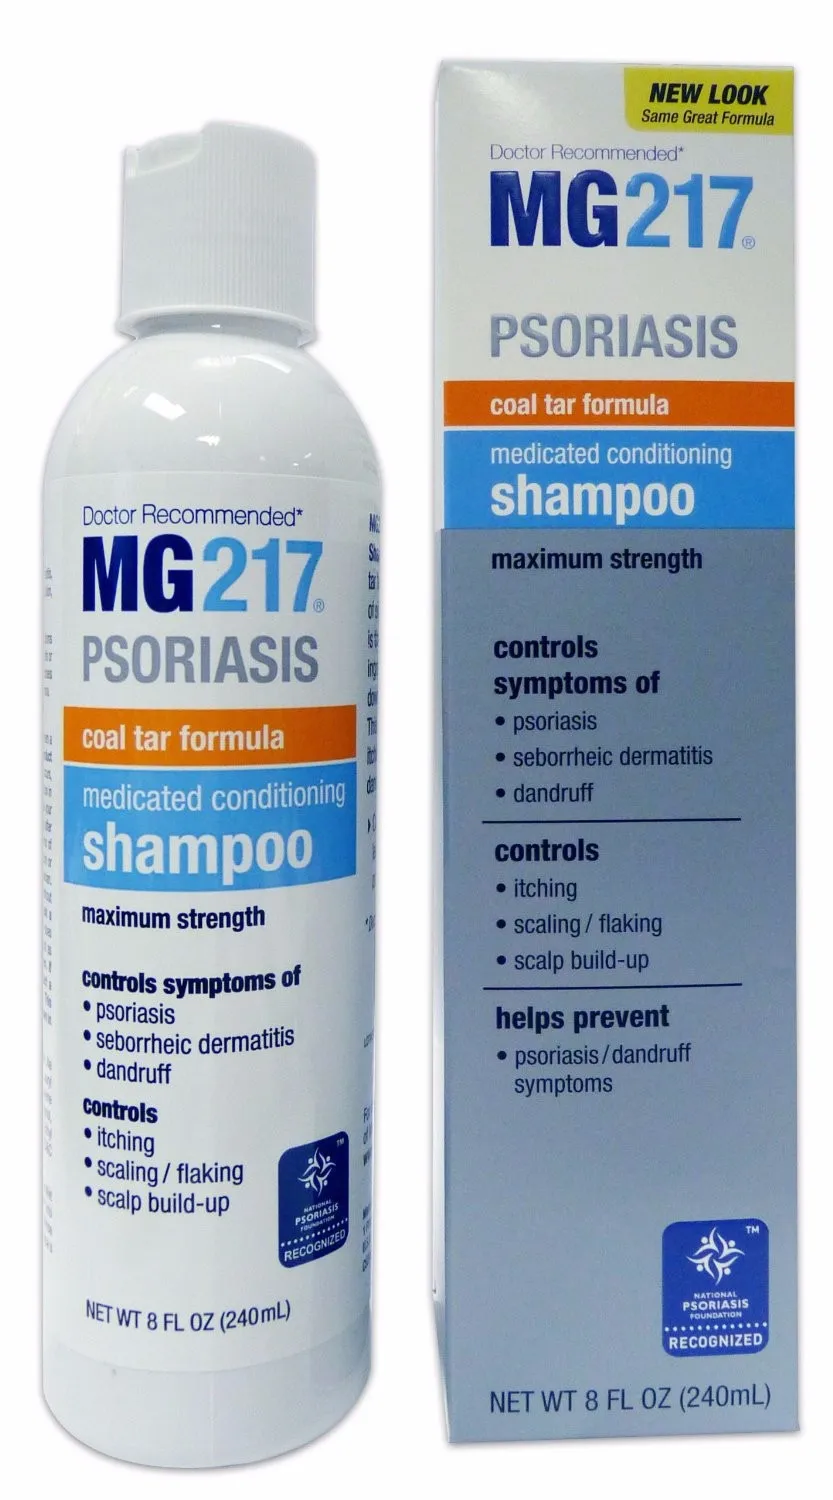 mg217 psoriasis shampoo)